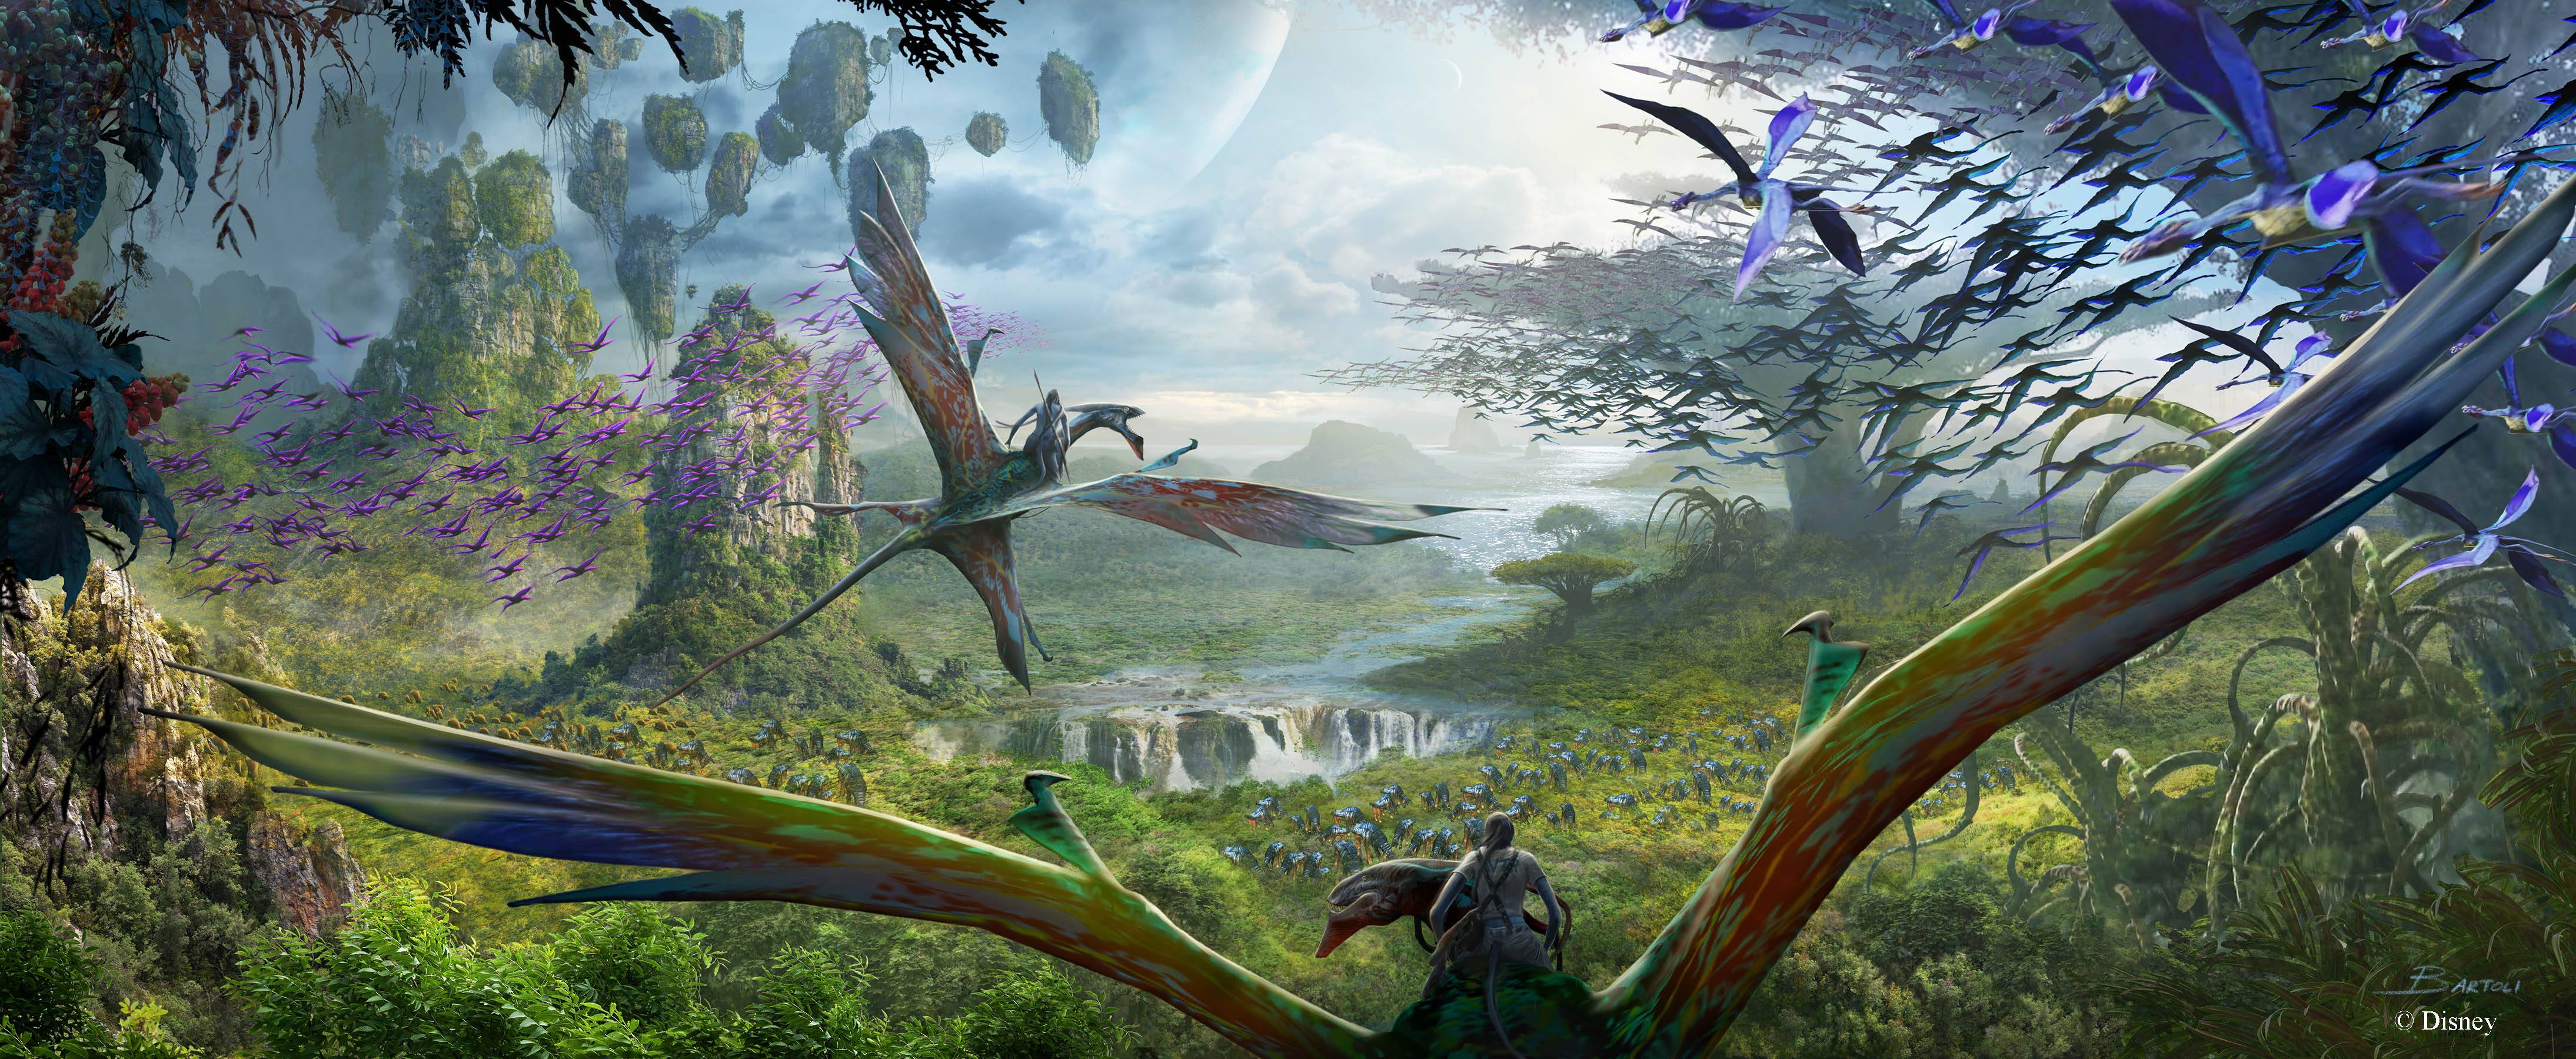 Concept art of Avatar Flight of Passage movie